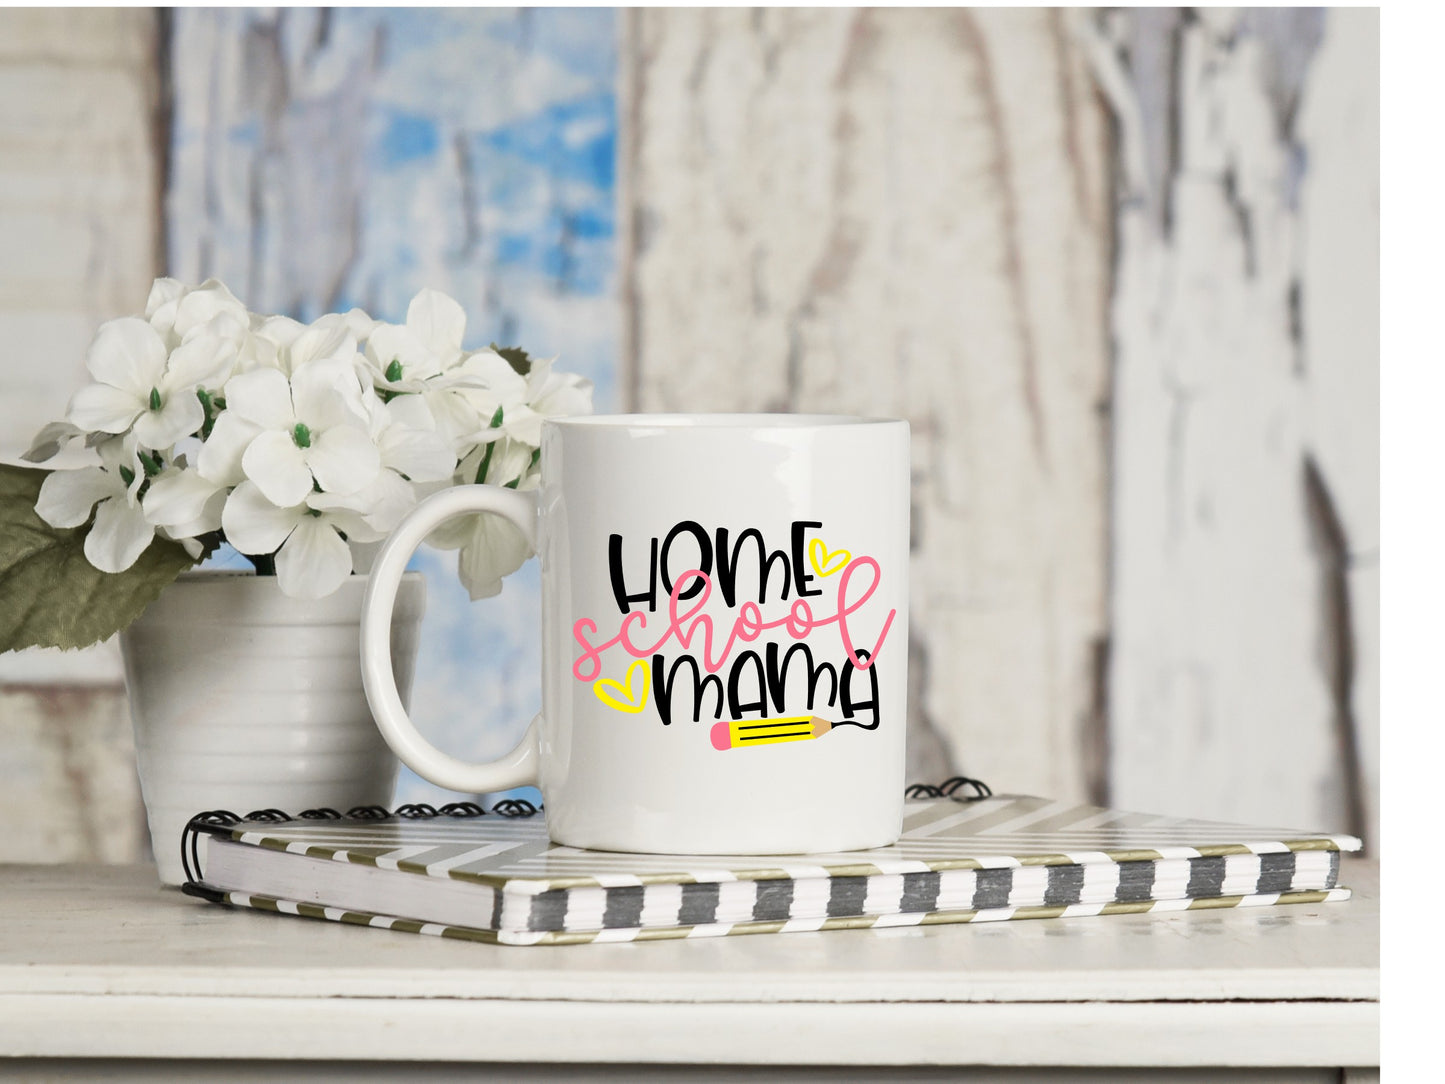 Homeschool mama coffee mug